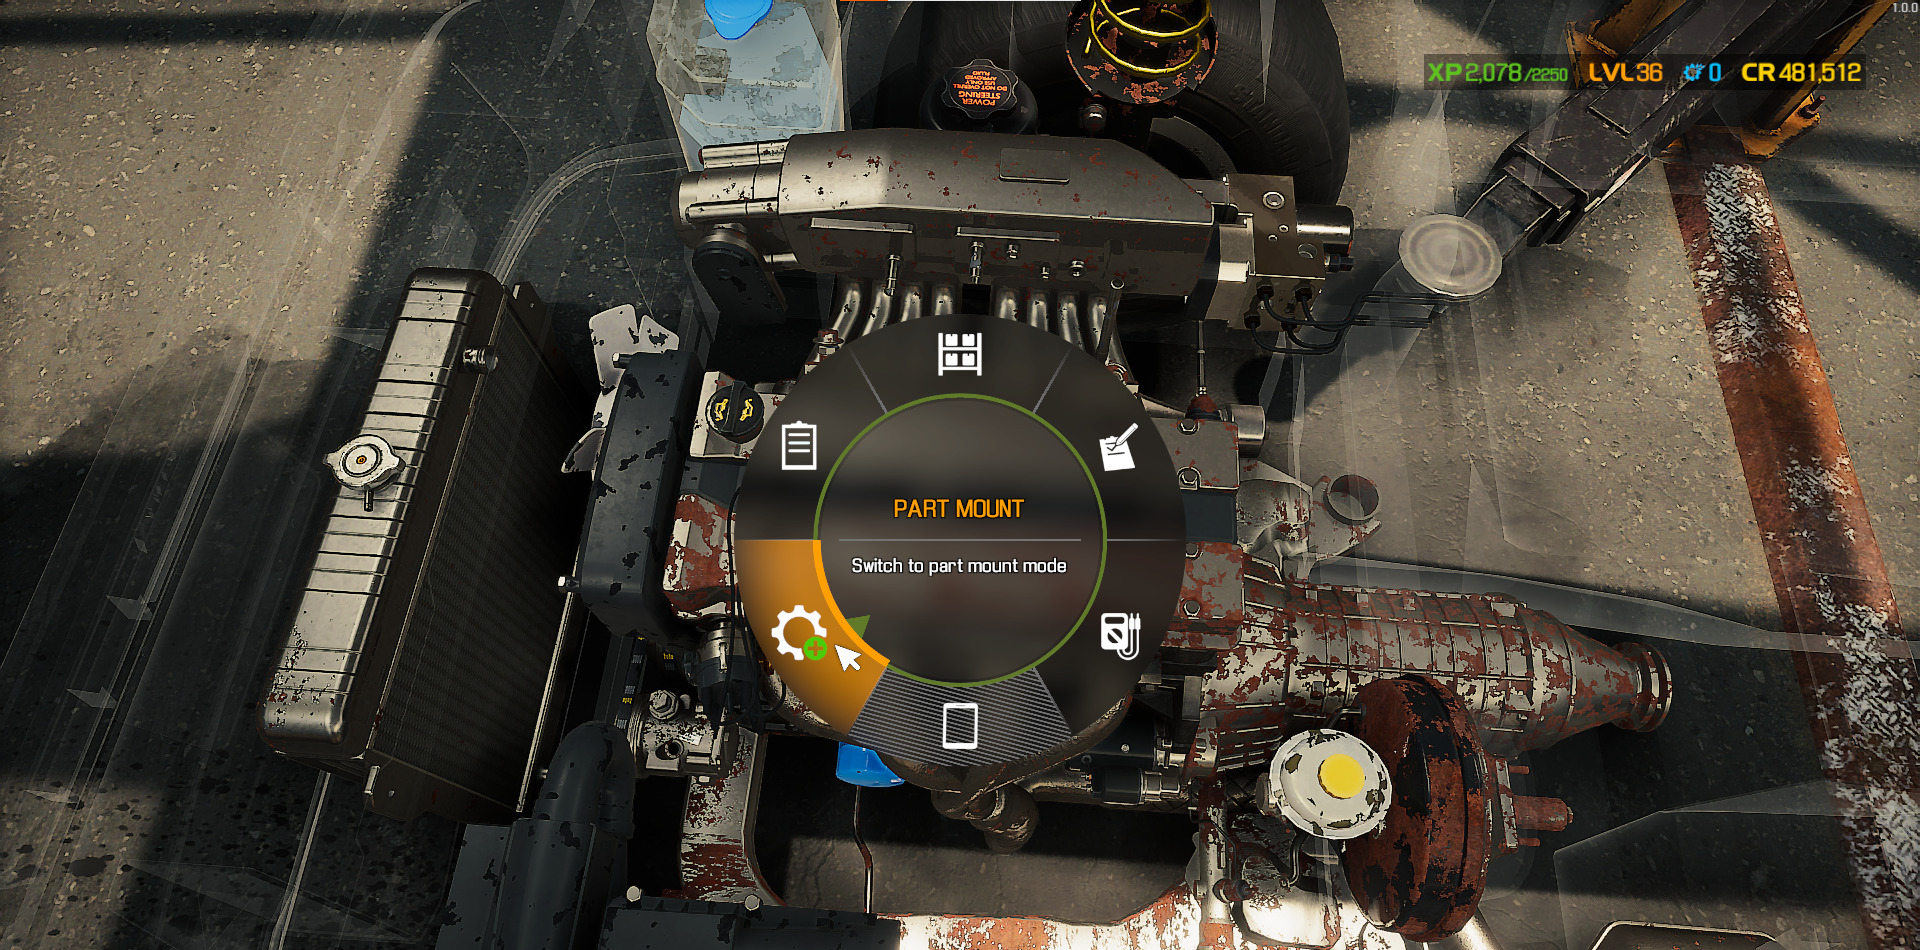 A screenshot showing the Part Mount command in Car Mechanic Simulator